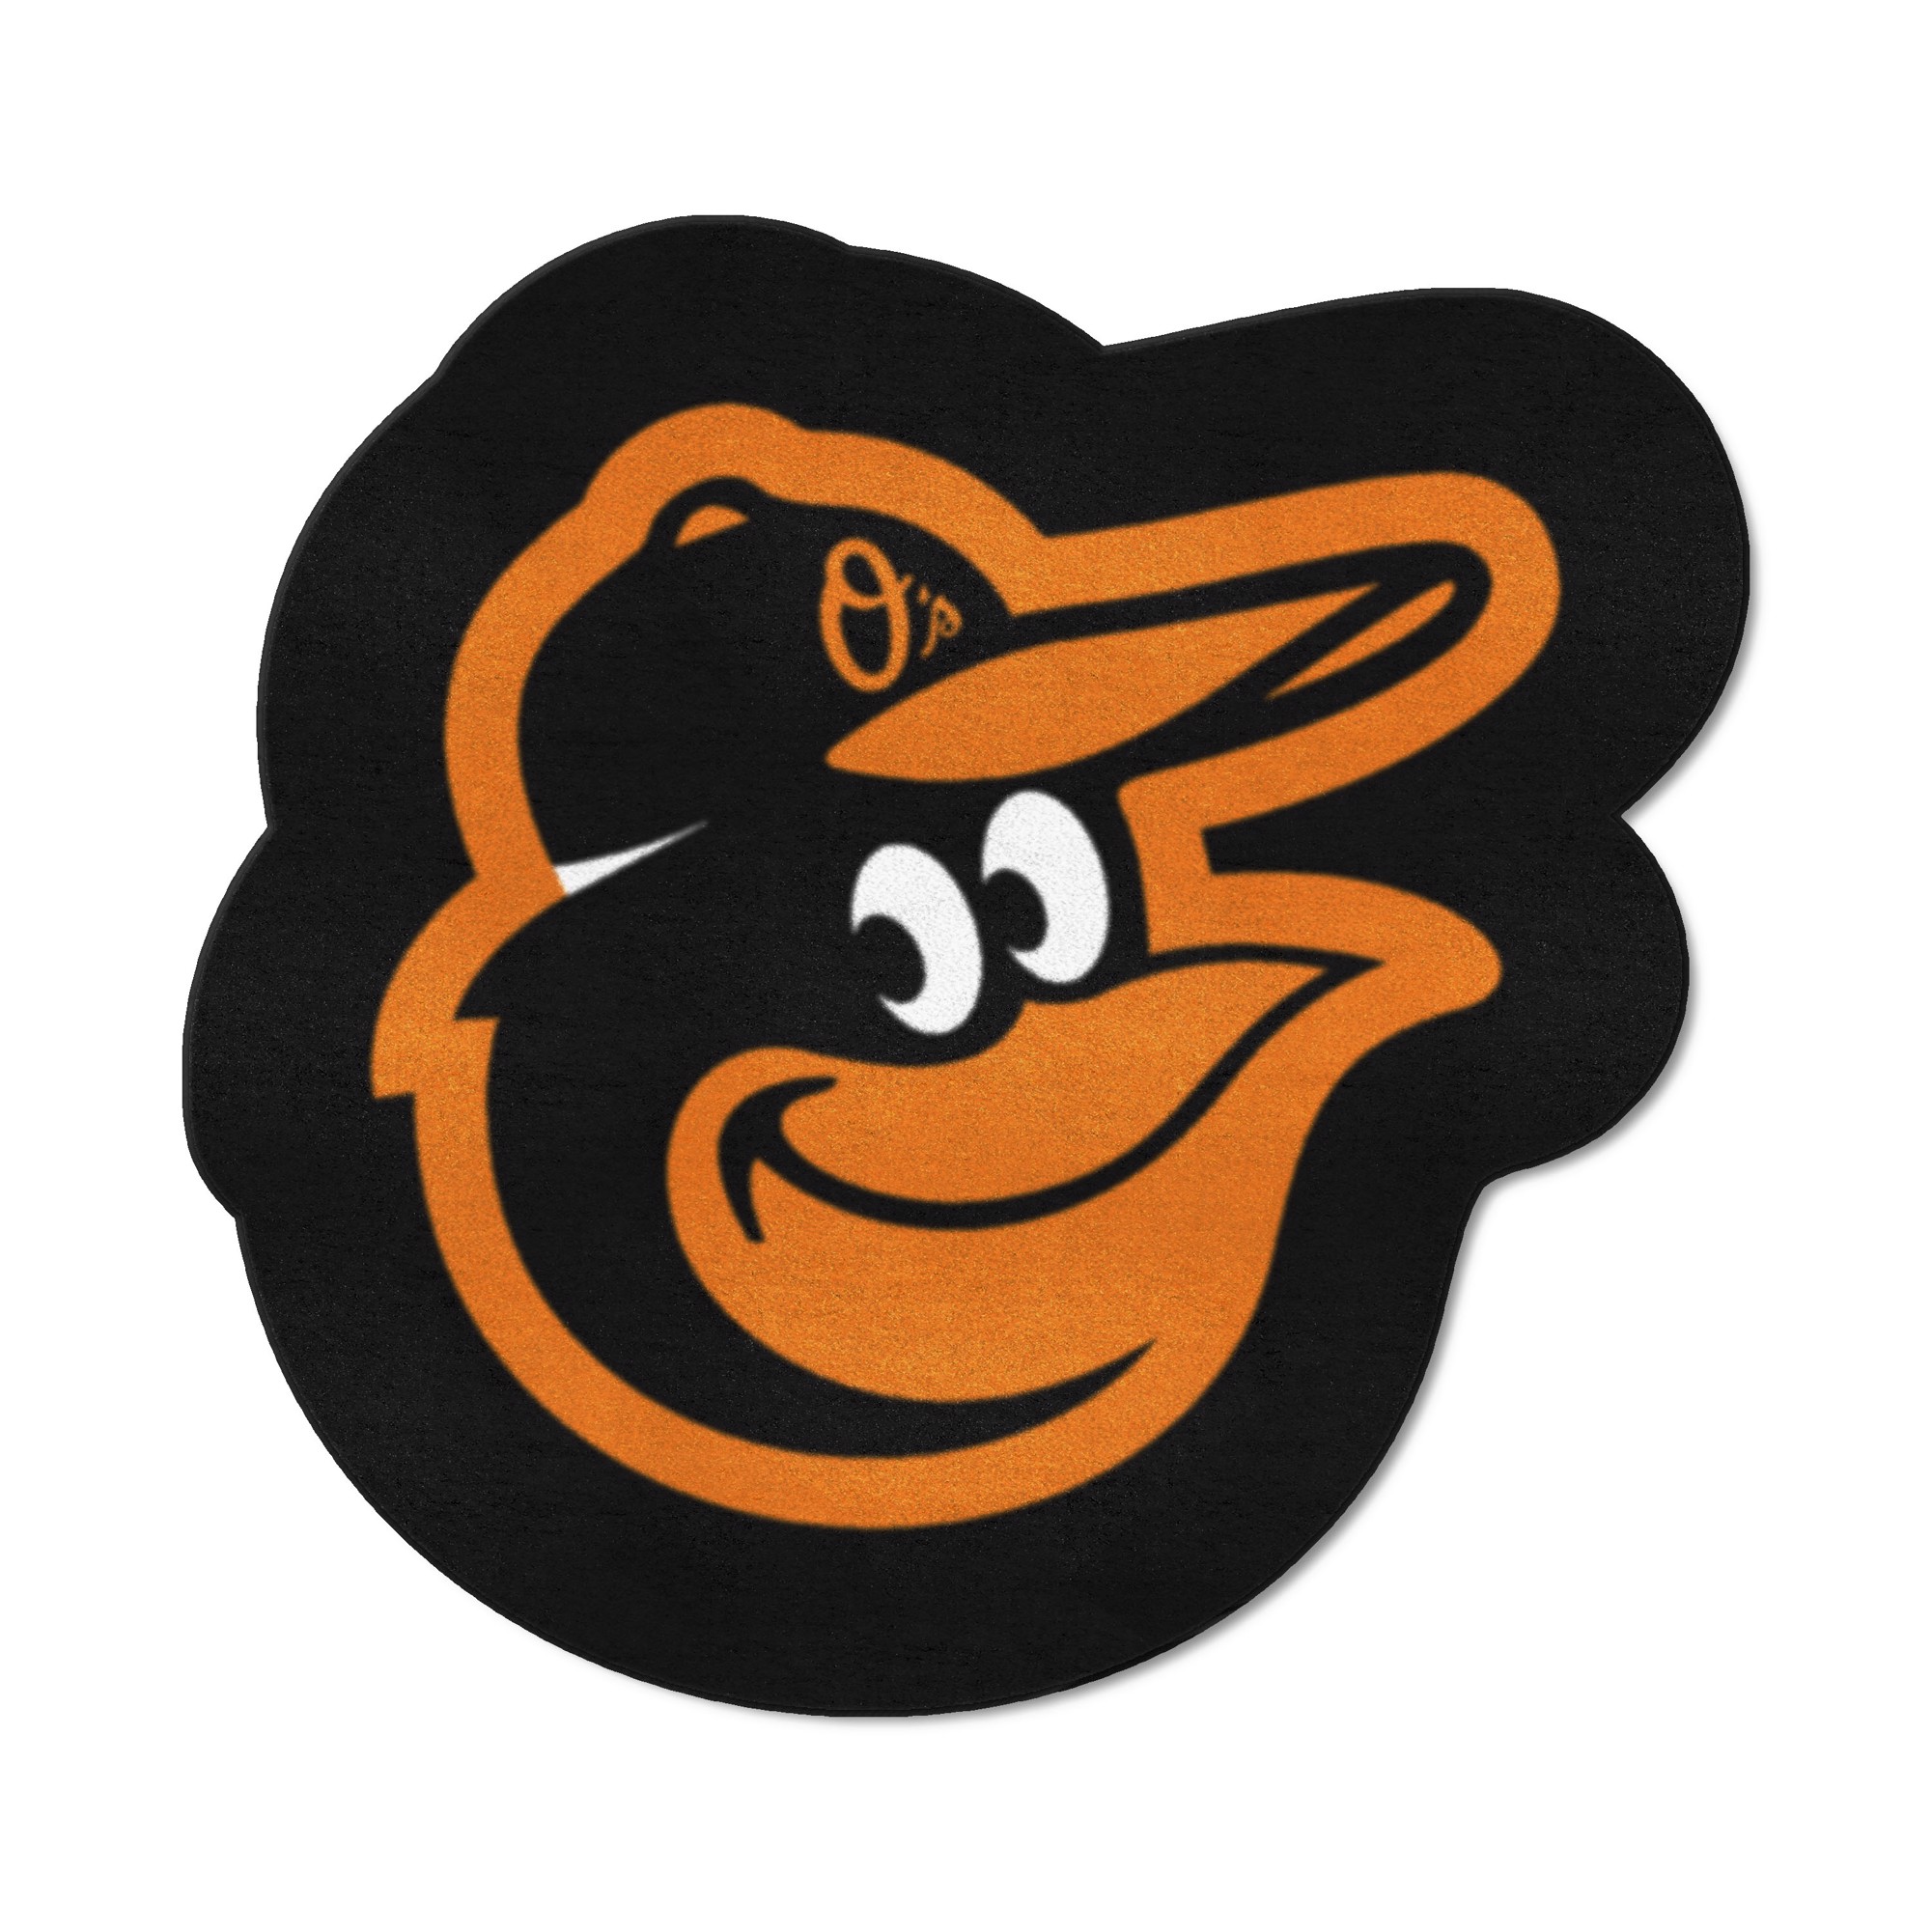 Orioles Logos & Mascots